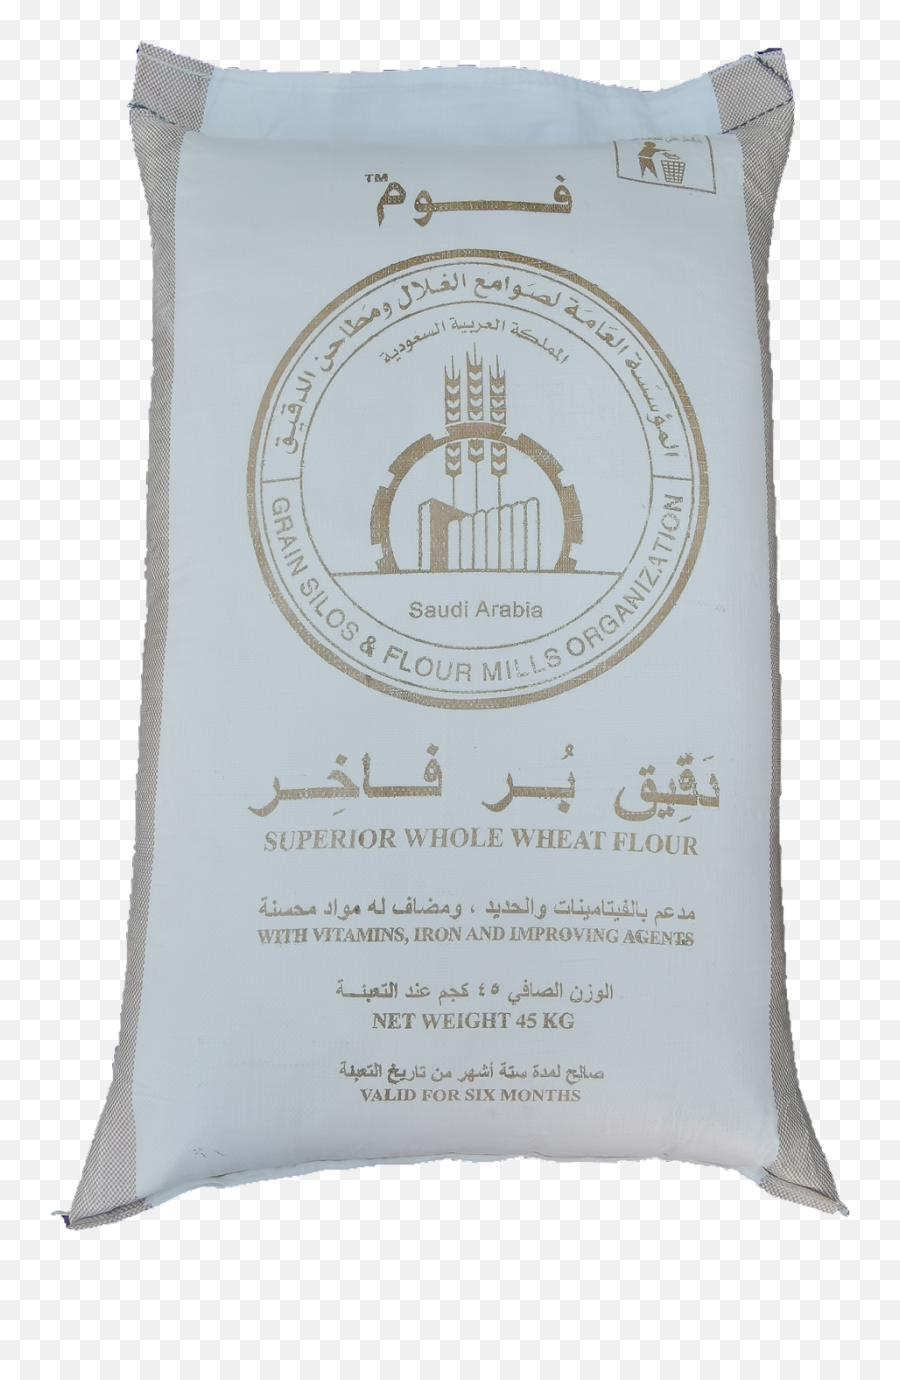 Foom Wheat Flour U2013 Al - Shakhstrading Grain Silos And Flour Mills Organization Png,Flour Png